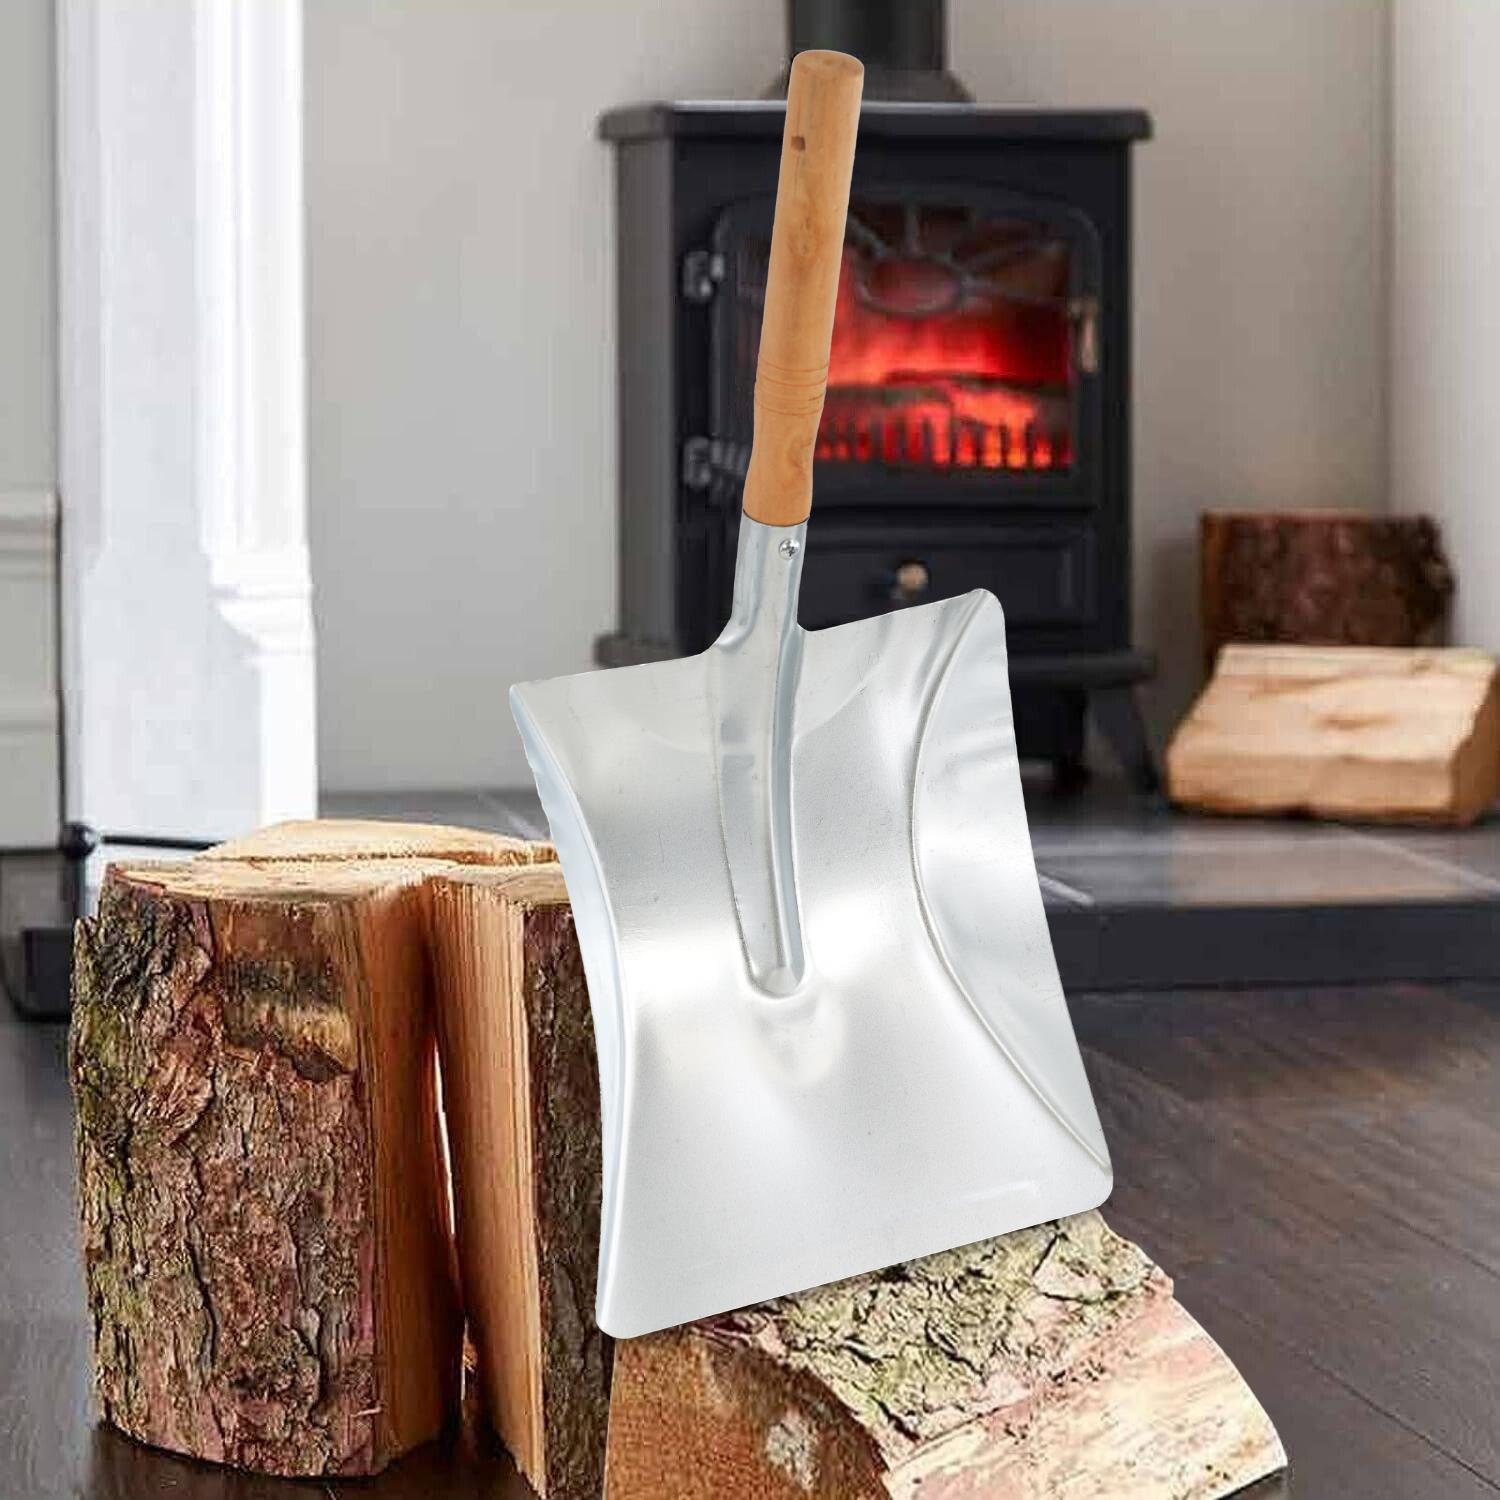 Compact Coal Shovel, Metal Head & Wooden Handle by GEEZY - UKBuyZone